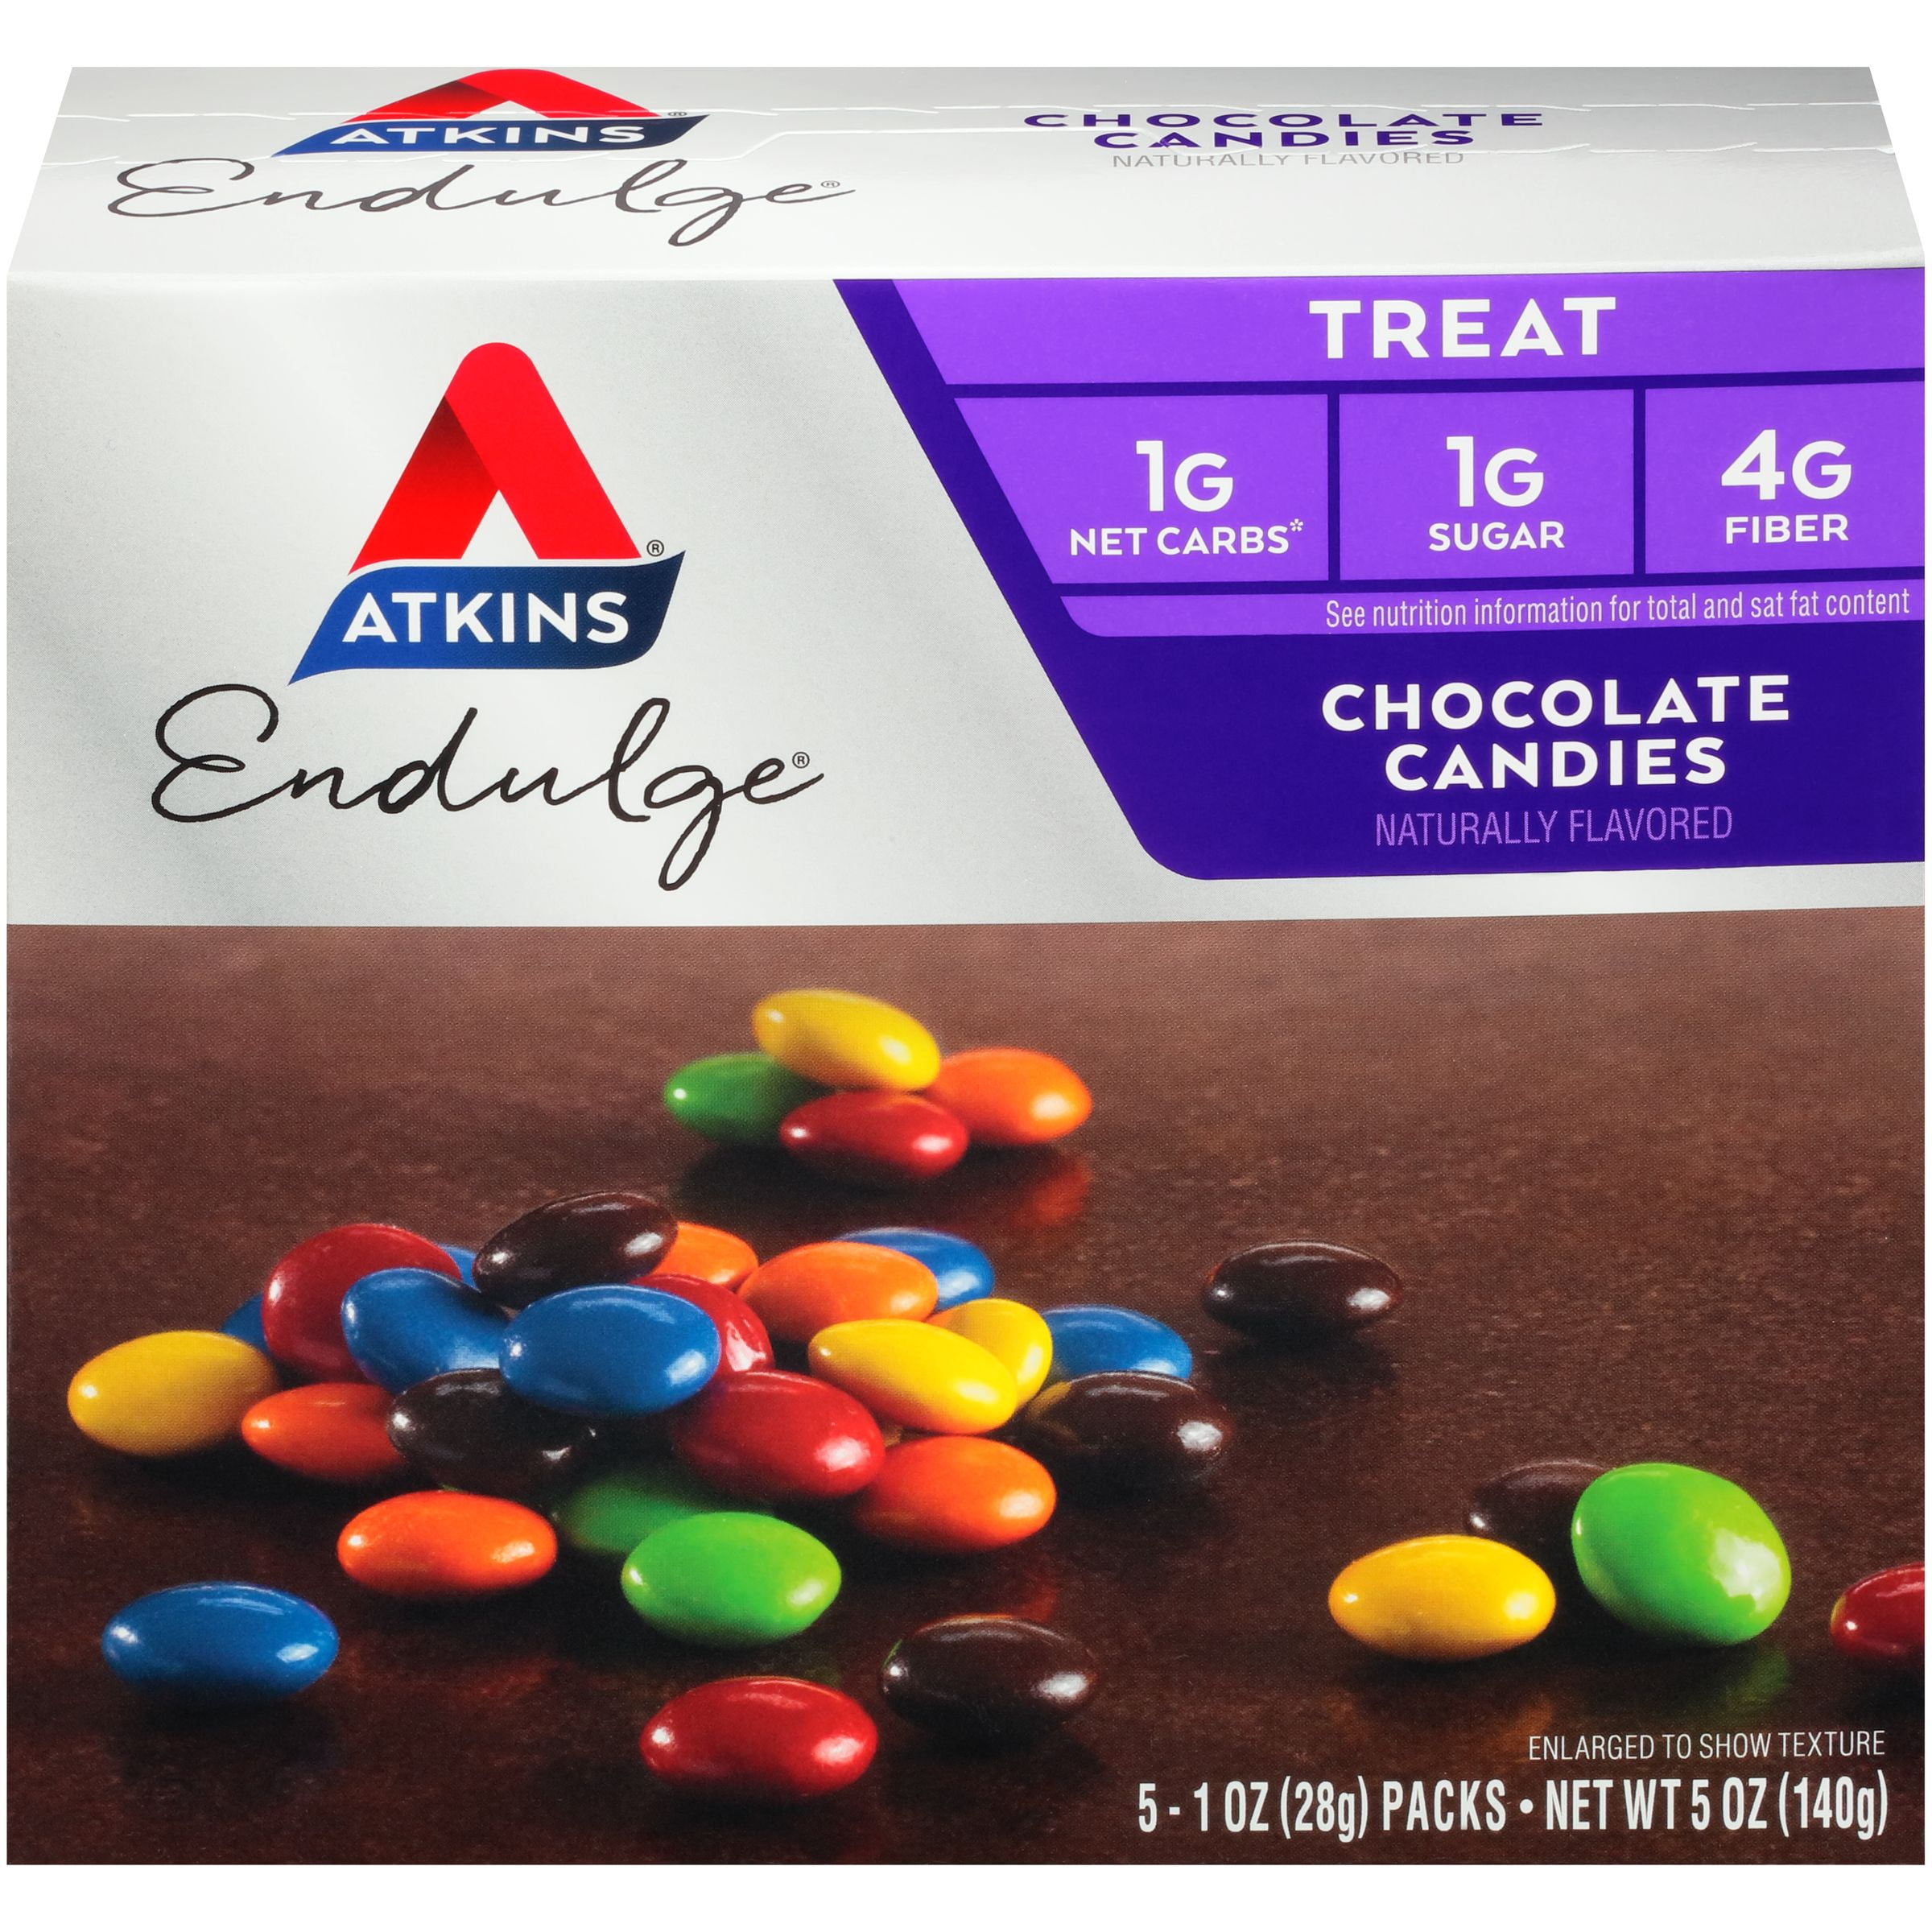 Atkins Endulge Treat, Chocolate Candies, Keto Friendly, 5 Count